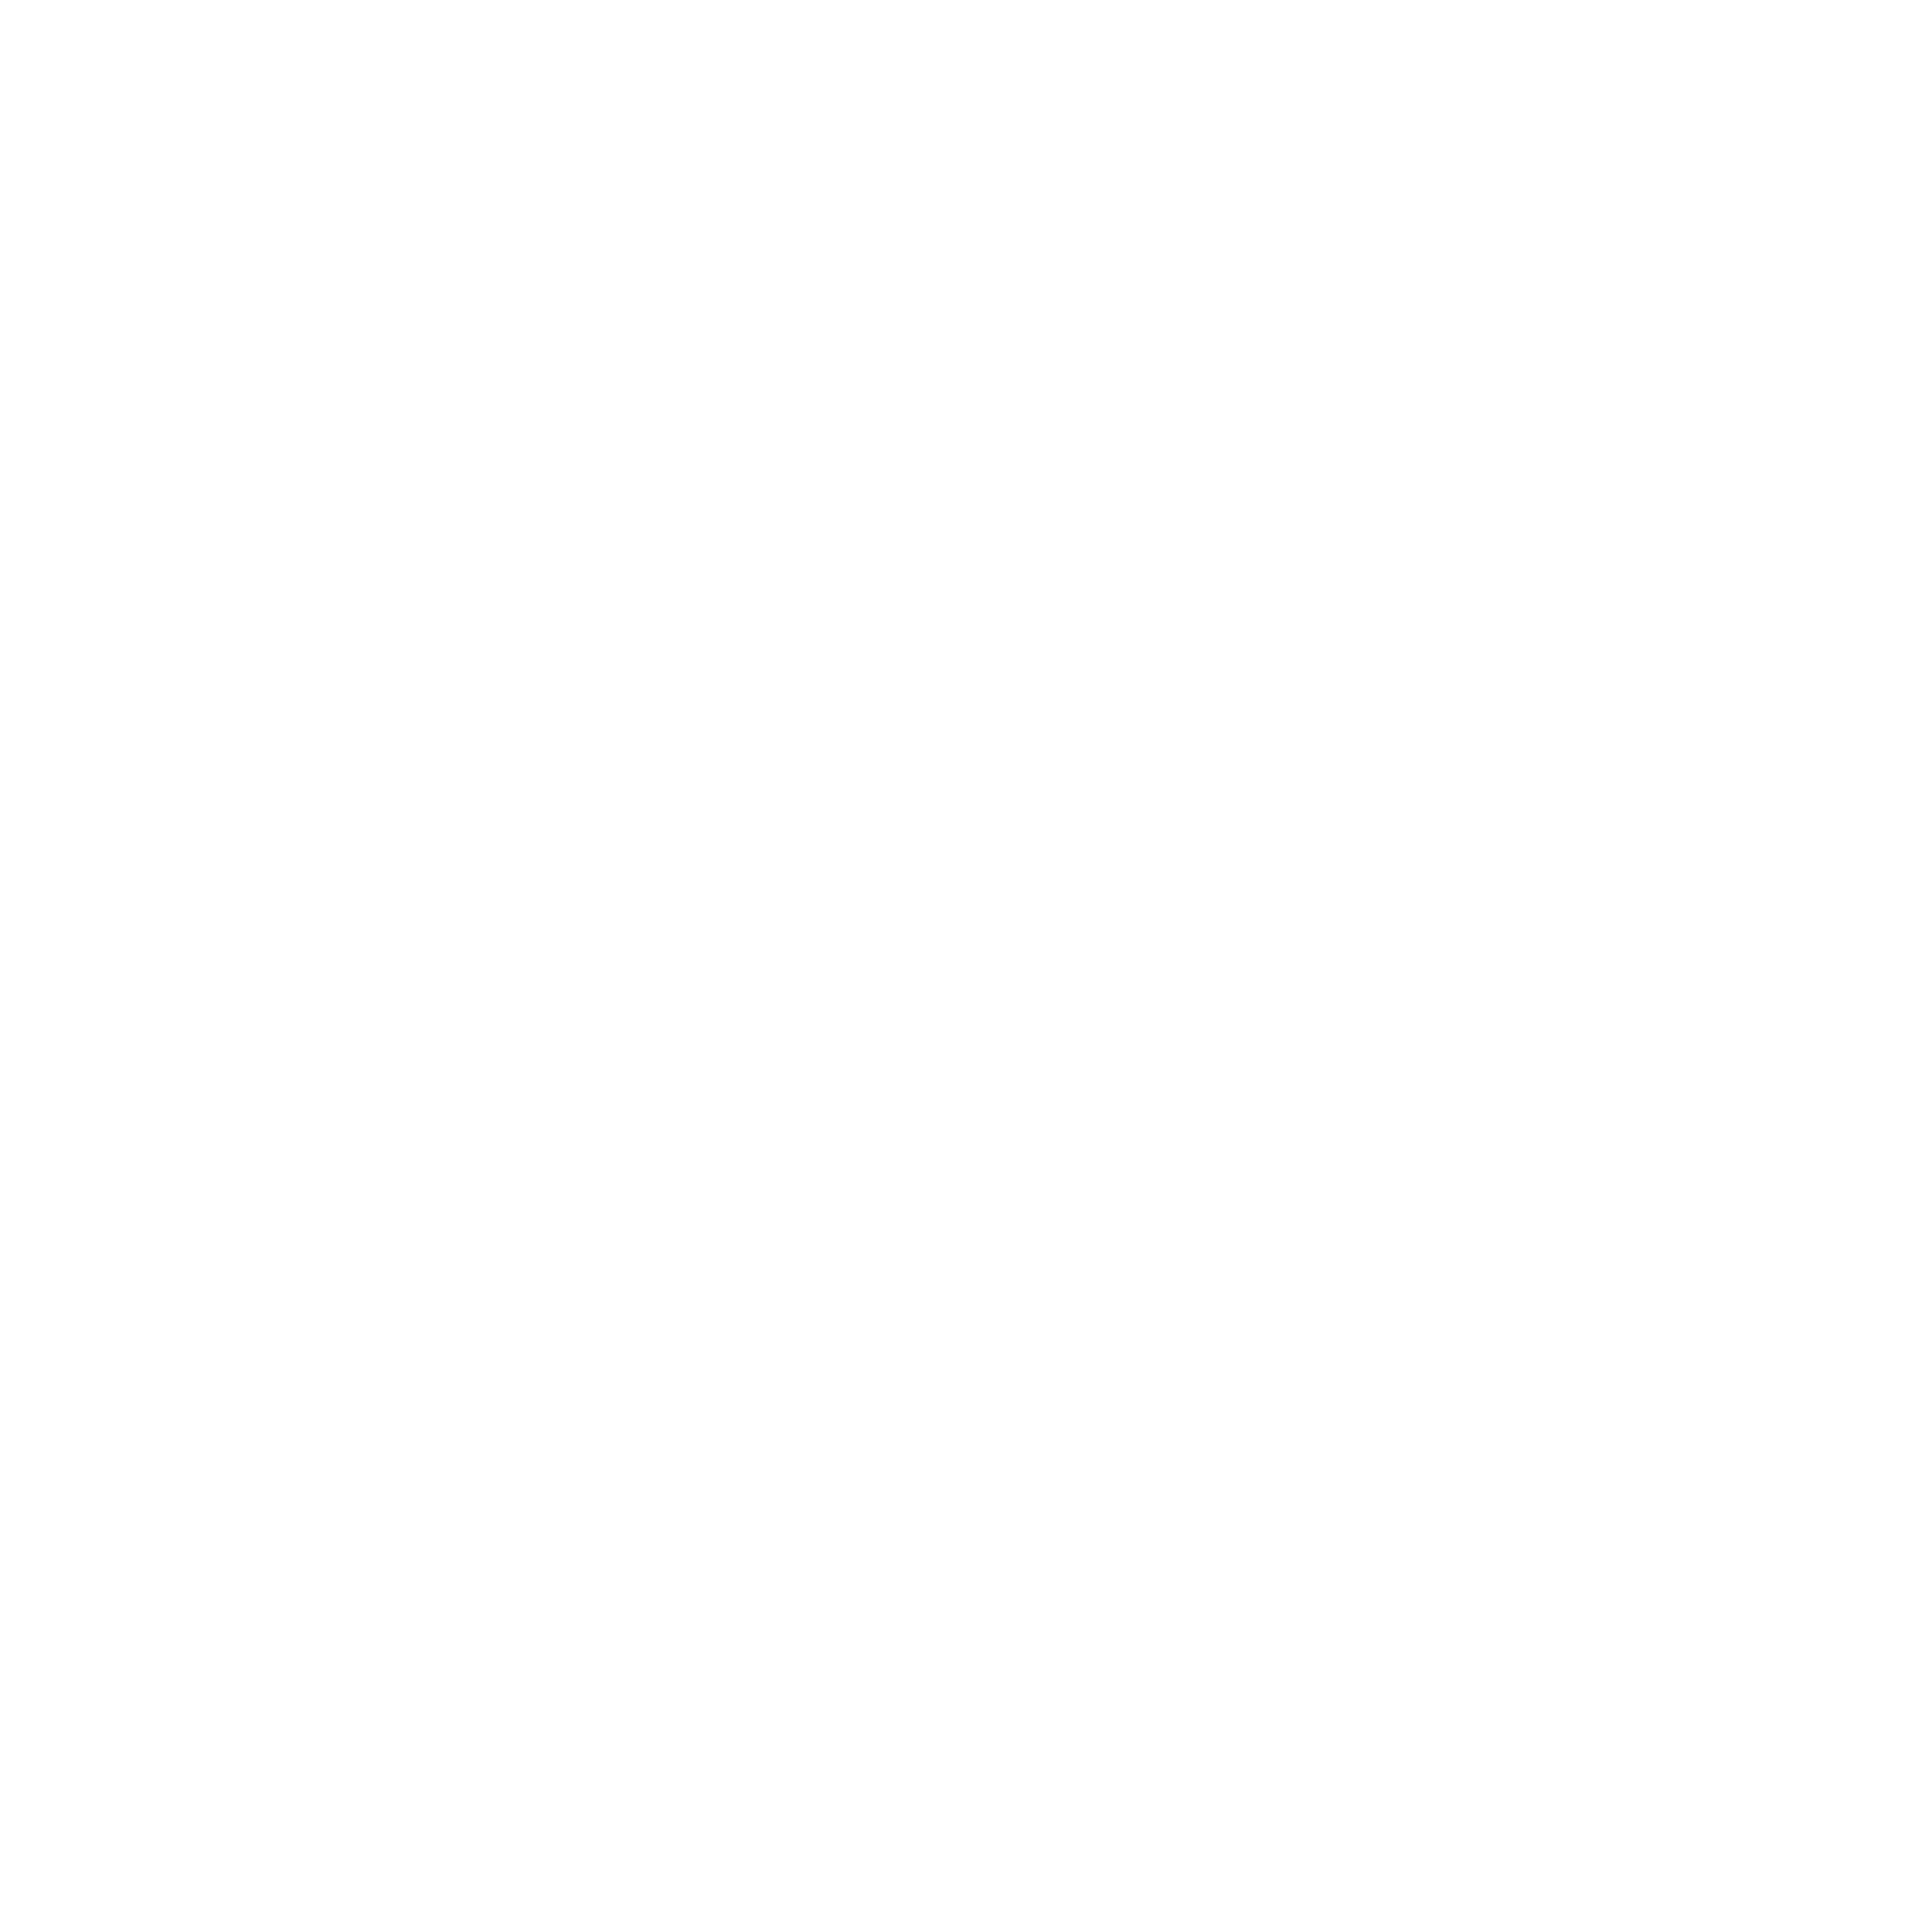 Shell Island Shuttle